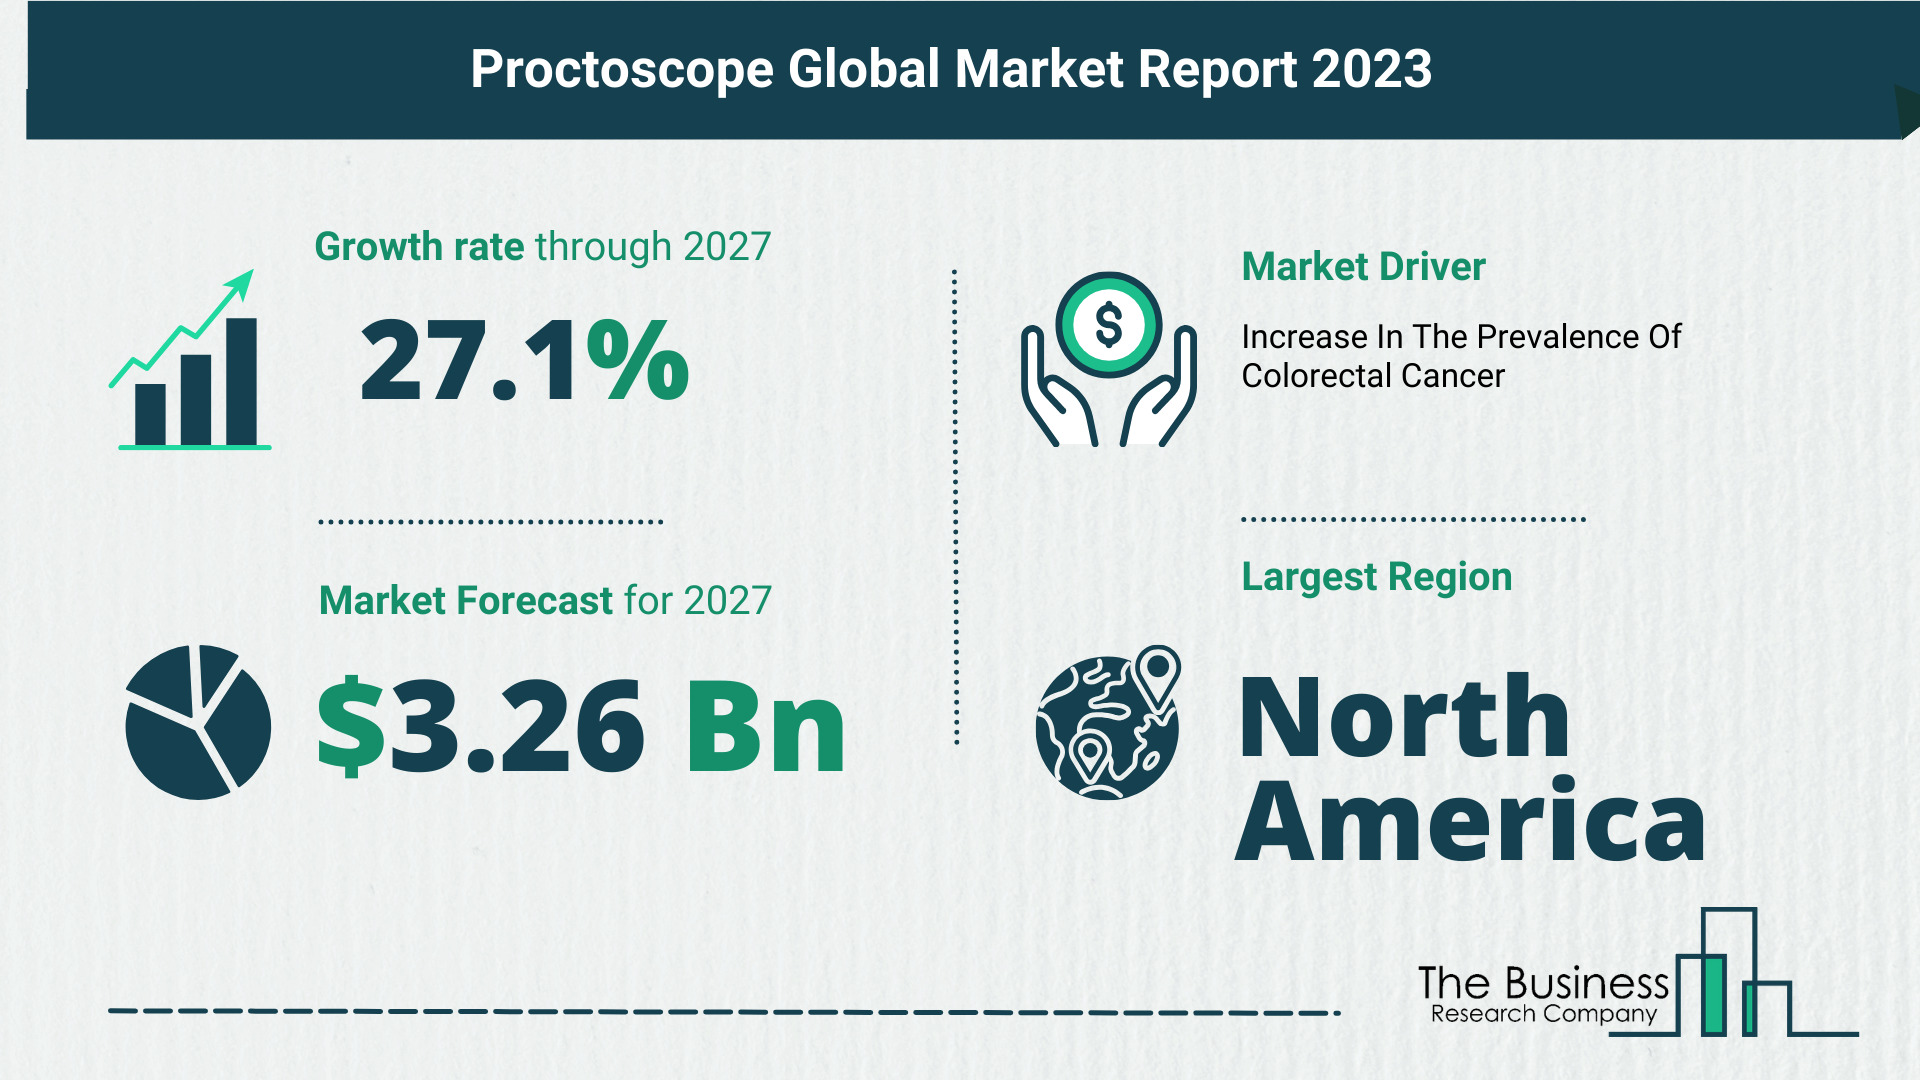 Global Proctoscope Market